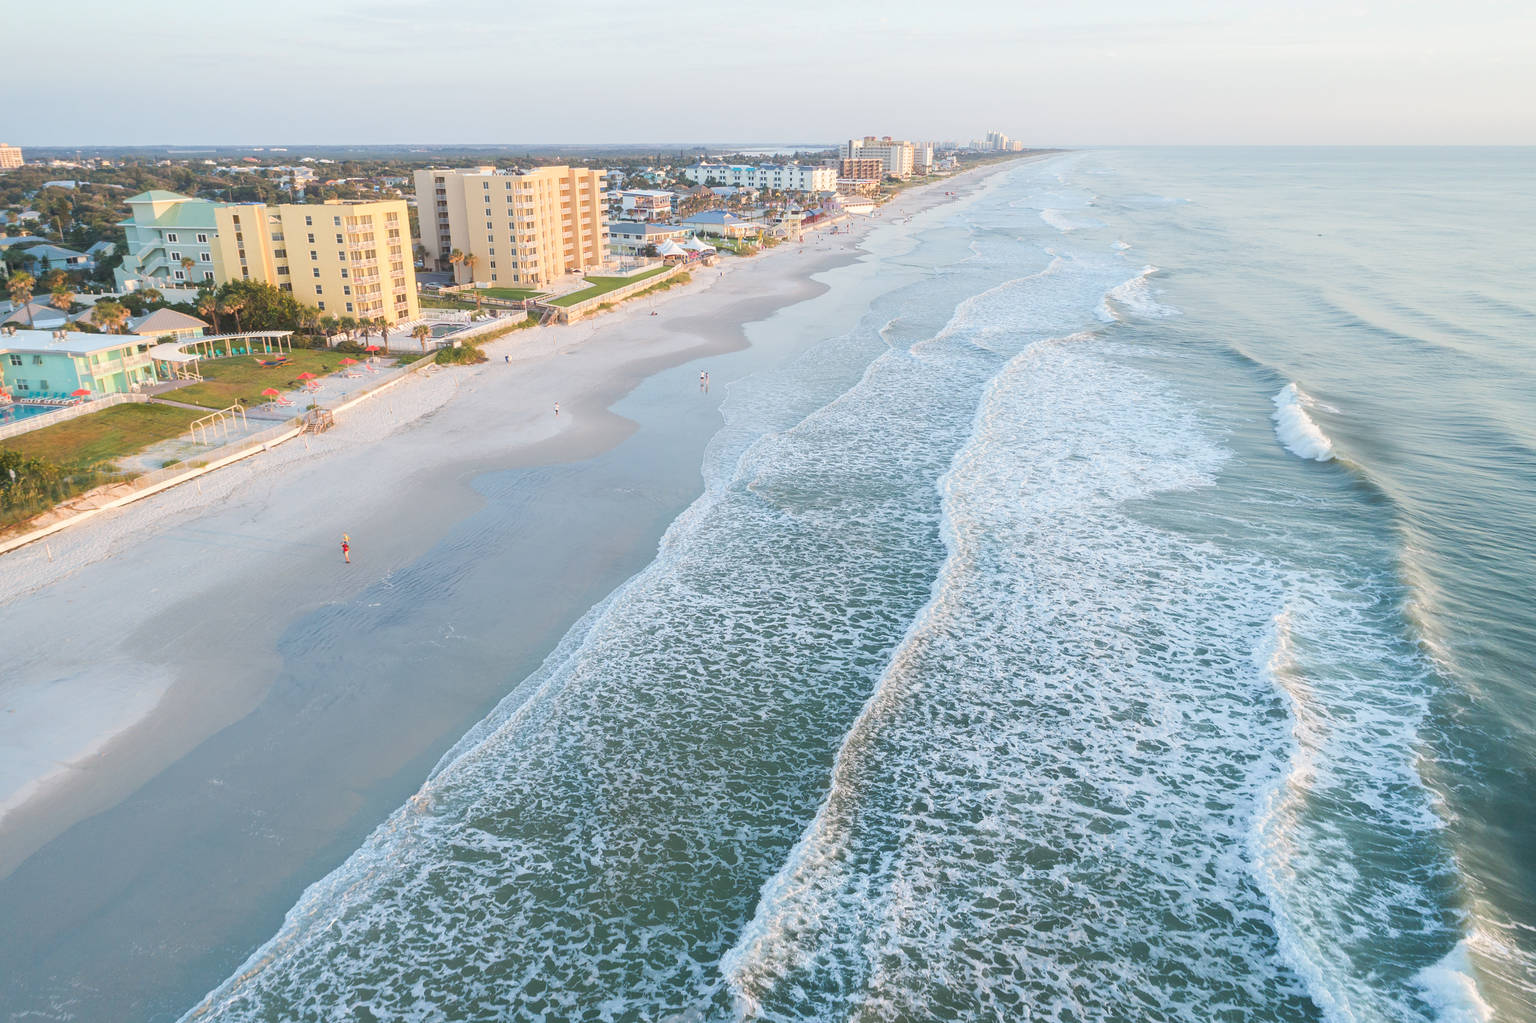 New Smyrna Beach Vacation Rentals: Beach Houses, Condos, Apartments, & More